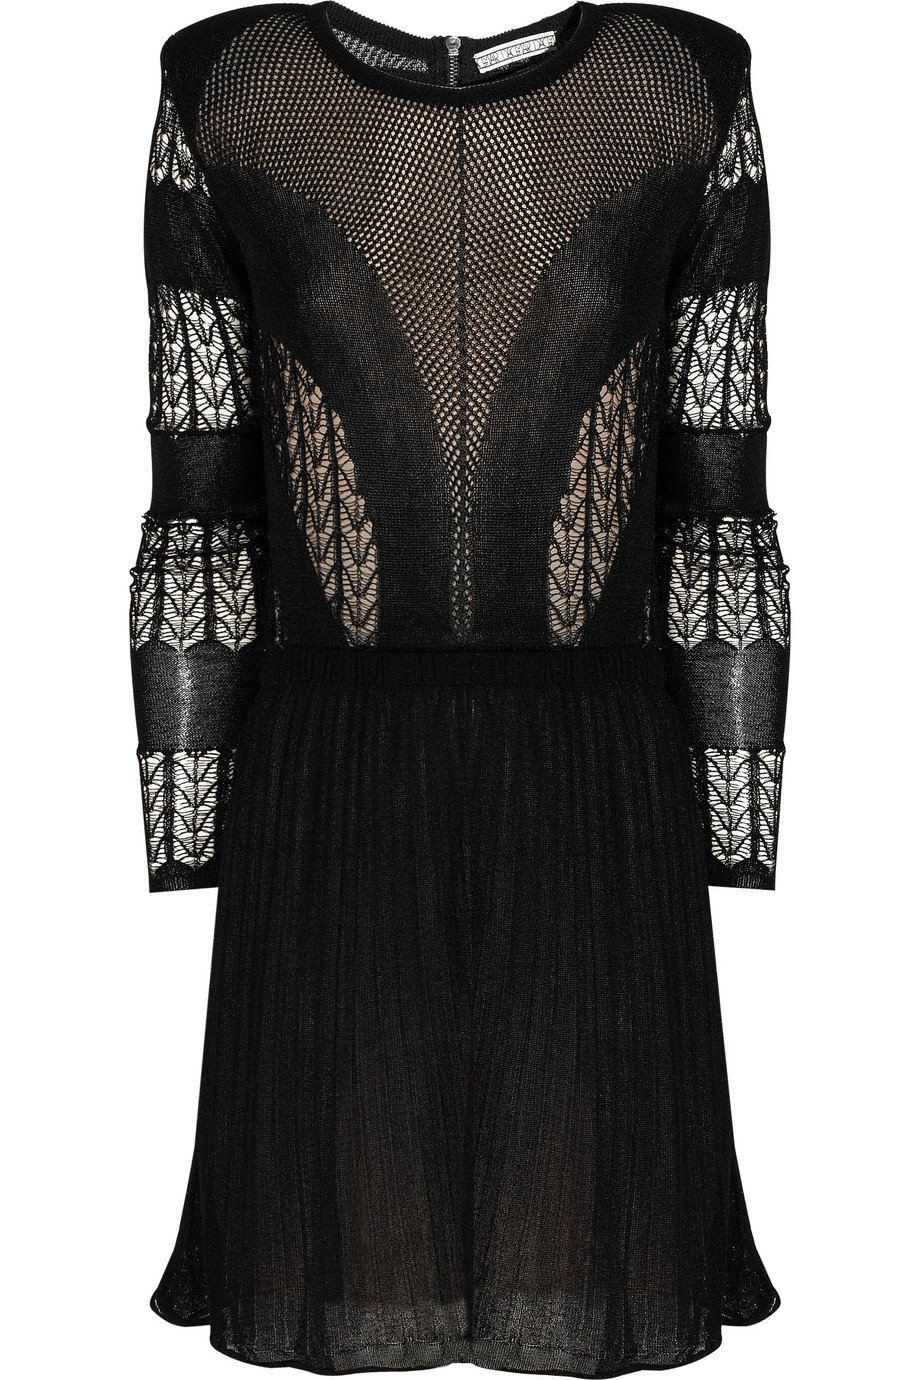 Lyst - Dagmar Elisa Lace Dress in Black